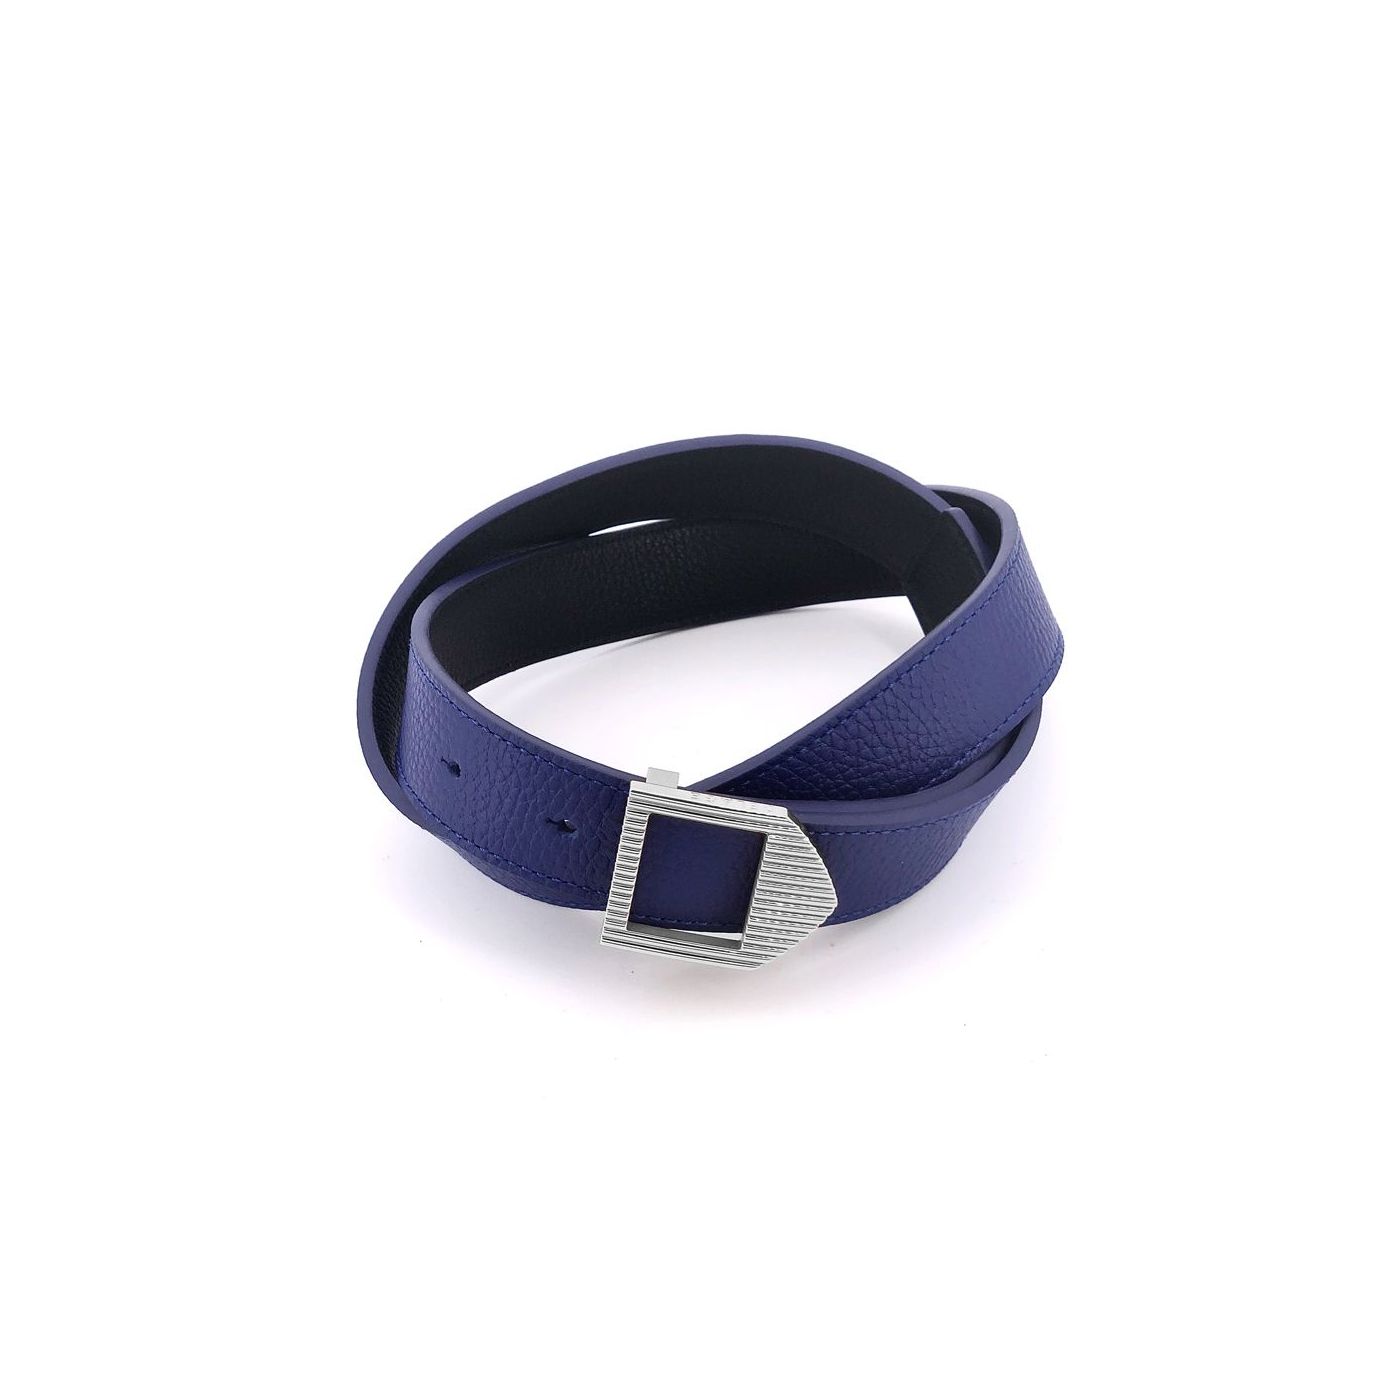 Reversible leather belt blue & black / silver buckle